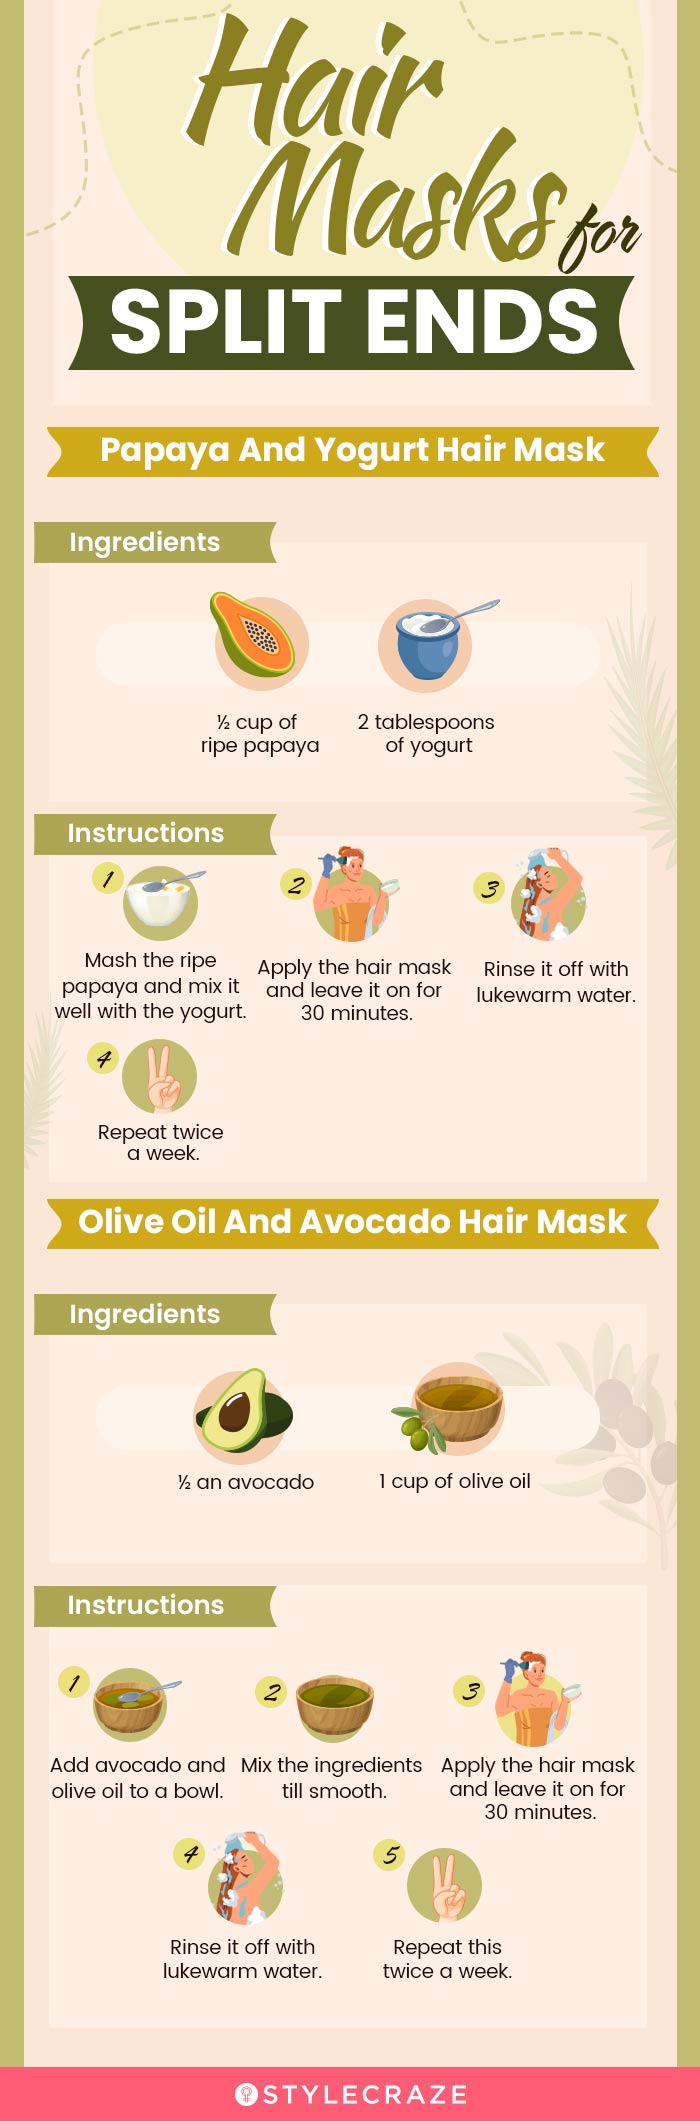 hair masks for split ends (infographic)